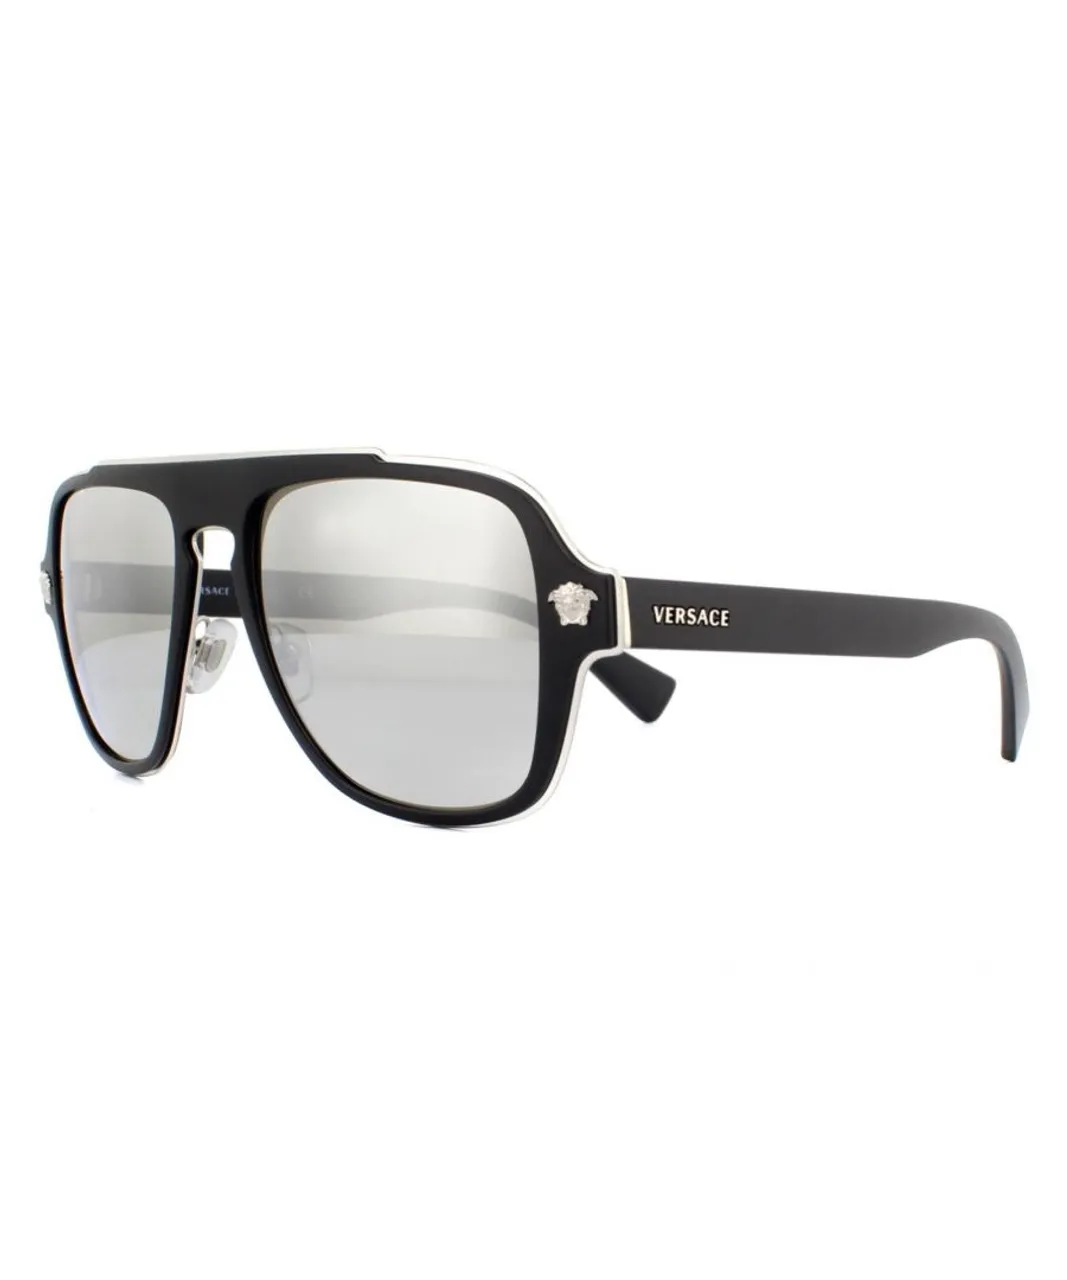 Versace Mens Sunglasses VE2199 10006G Matte Black Dark Grey Silver Mirror - One